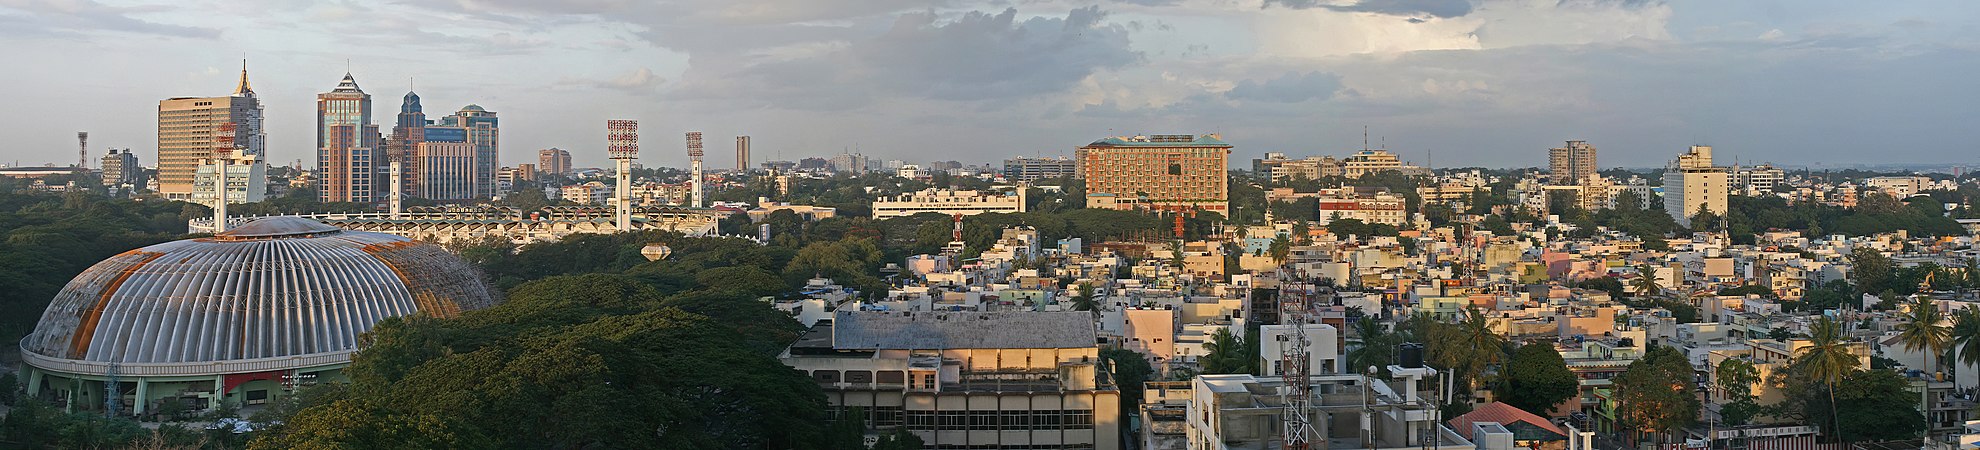 Bangalore, by Muhammad Mahdi Karim